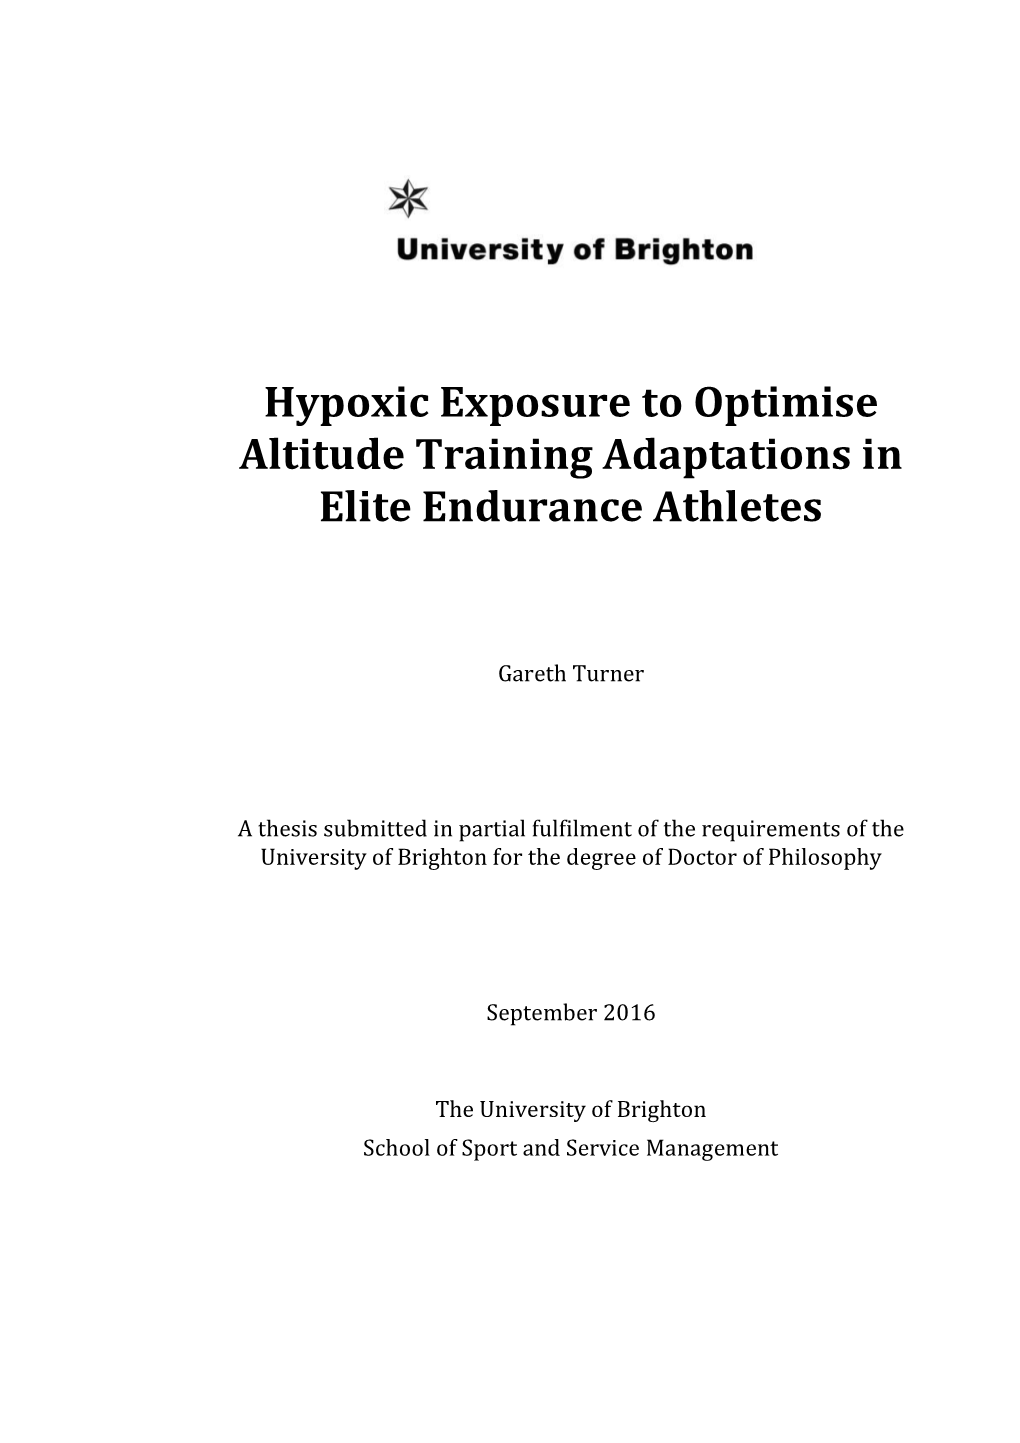 Hypoxic Exposure to Optimise Altitude Training Adaptations in Elite Endurance Athletes